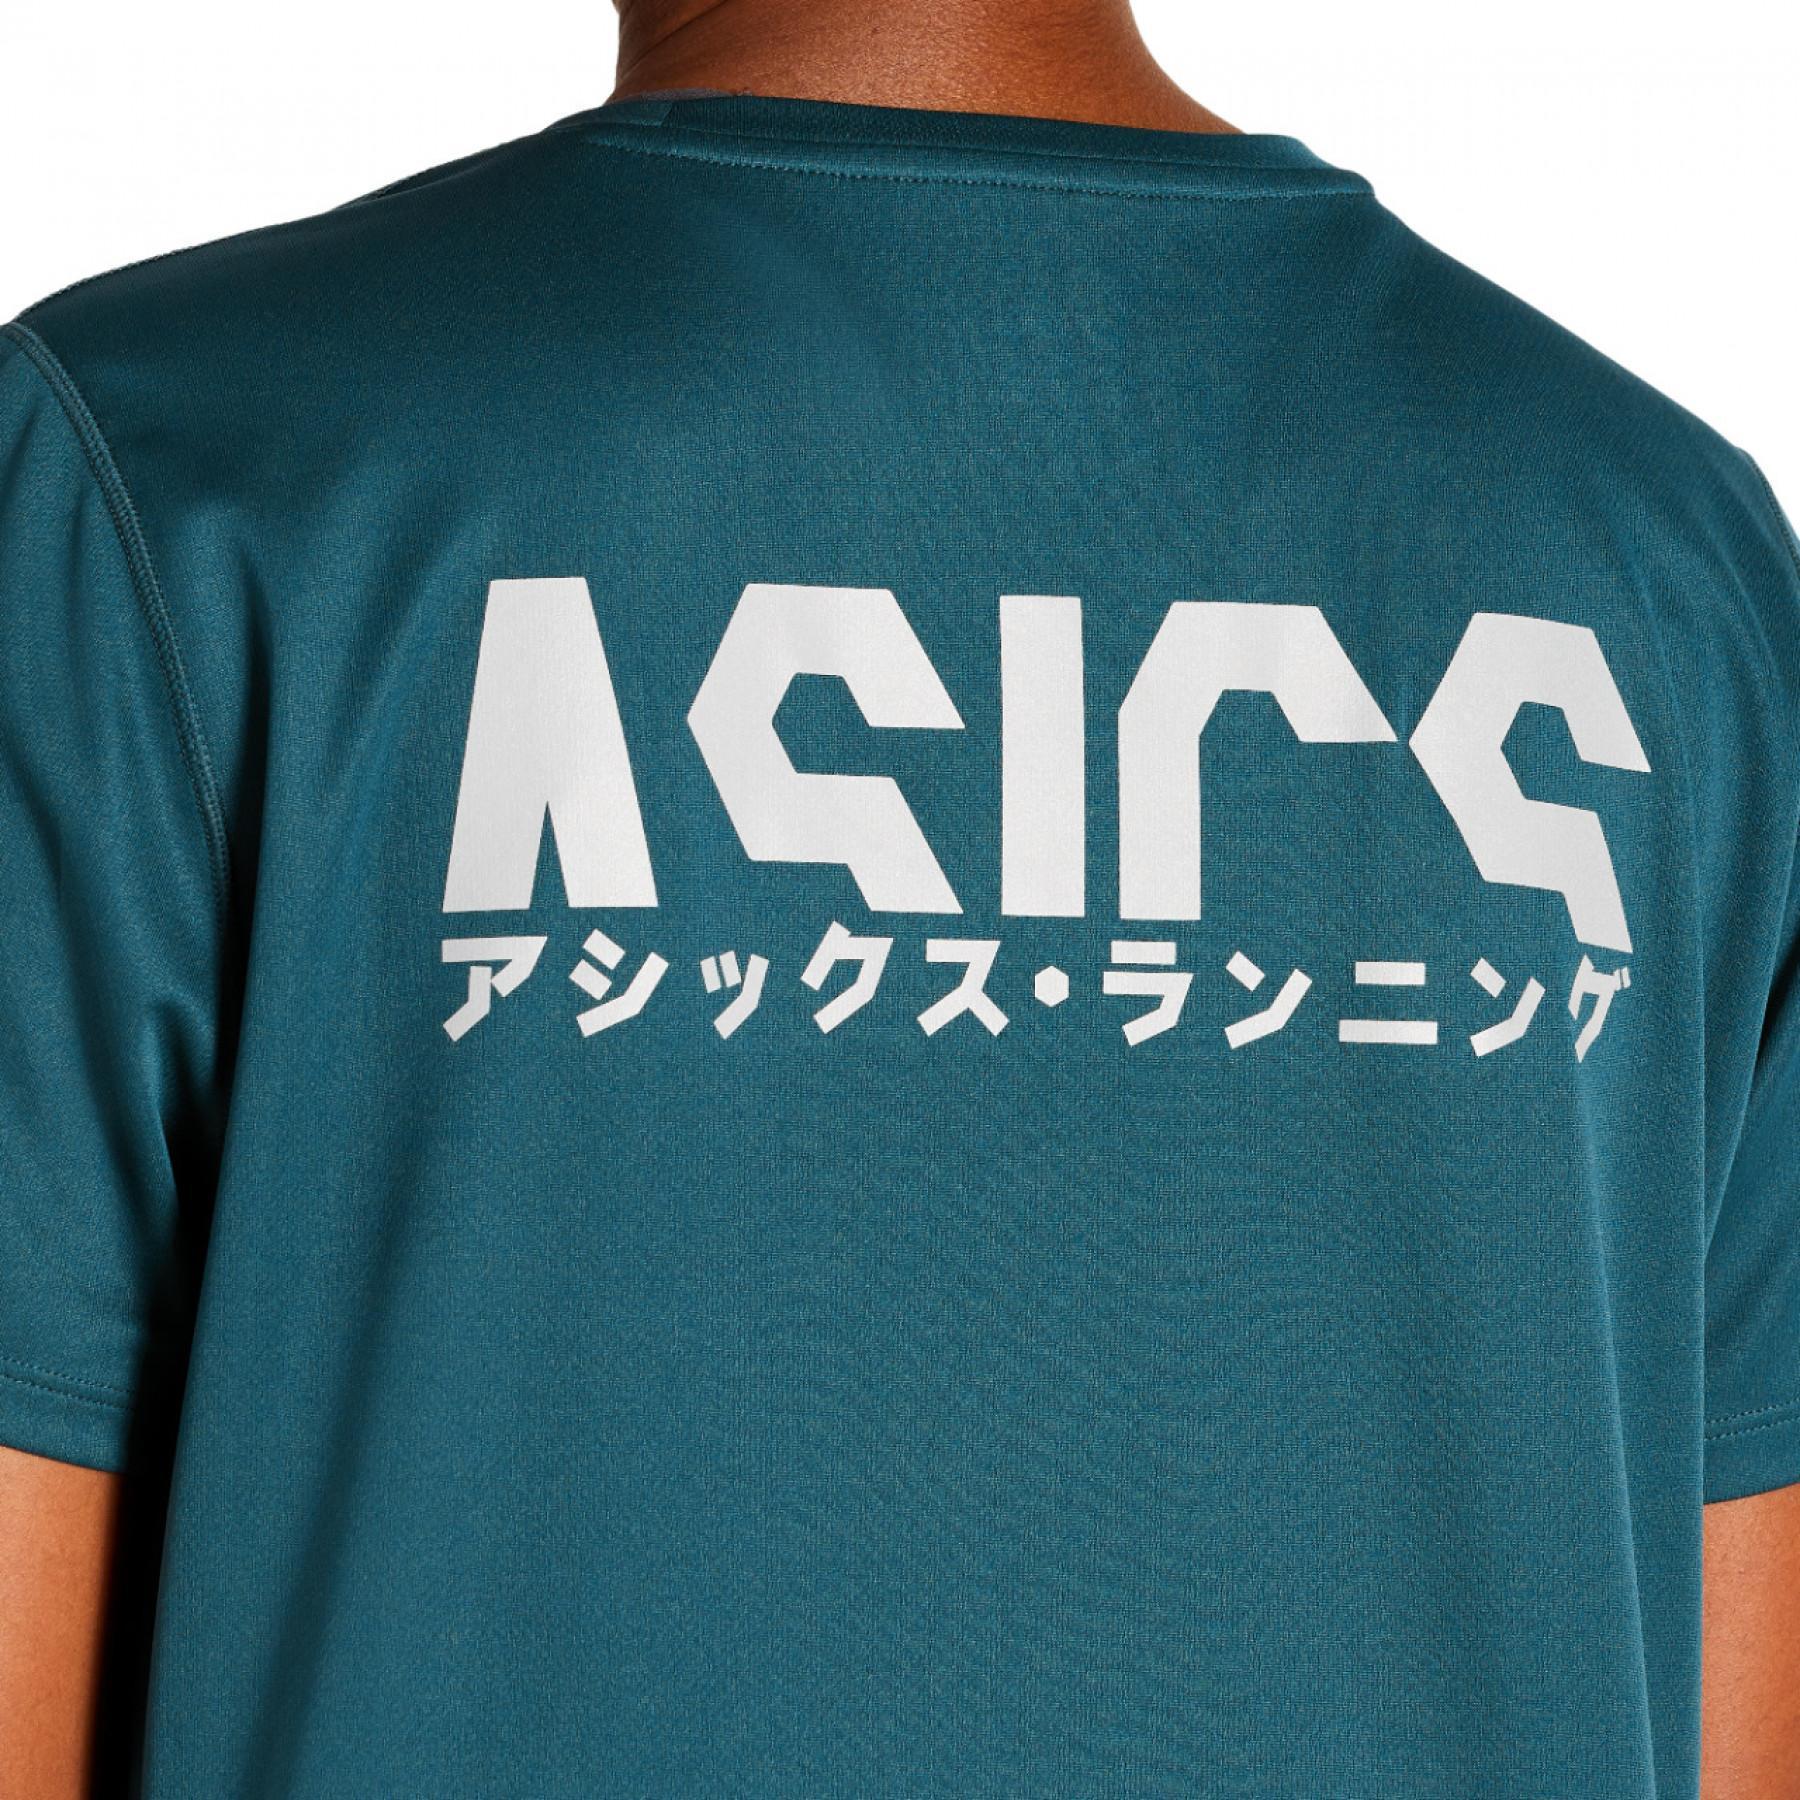 T-shirt woman Asics Katakana